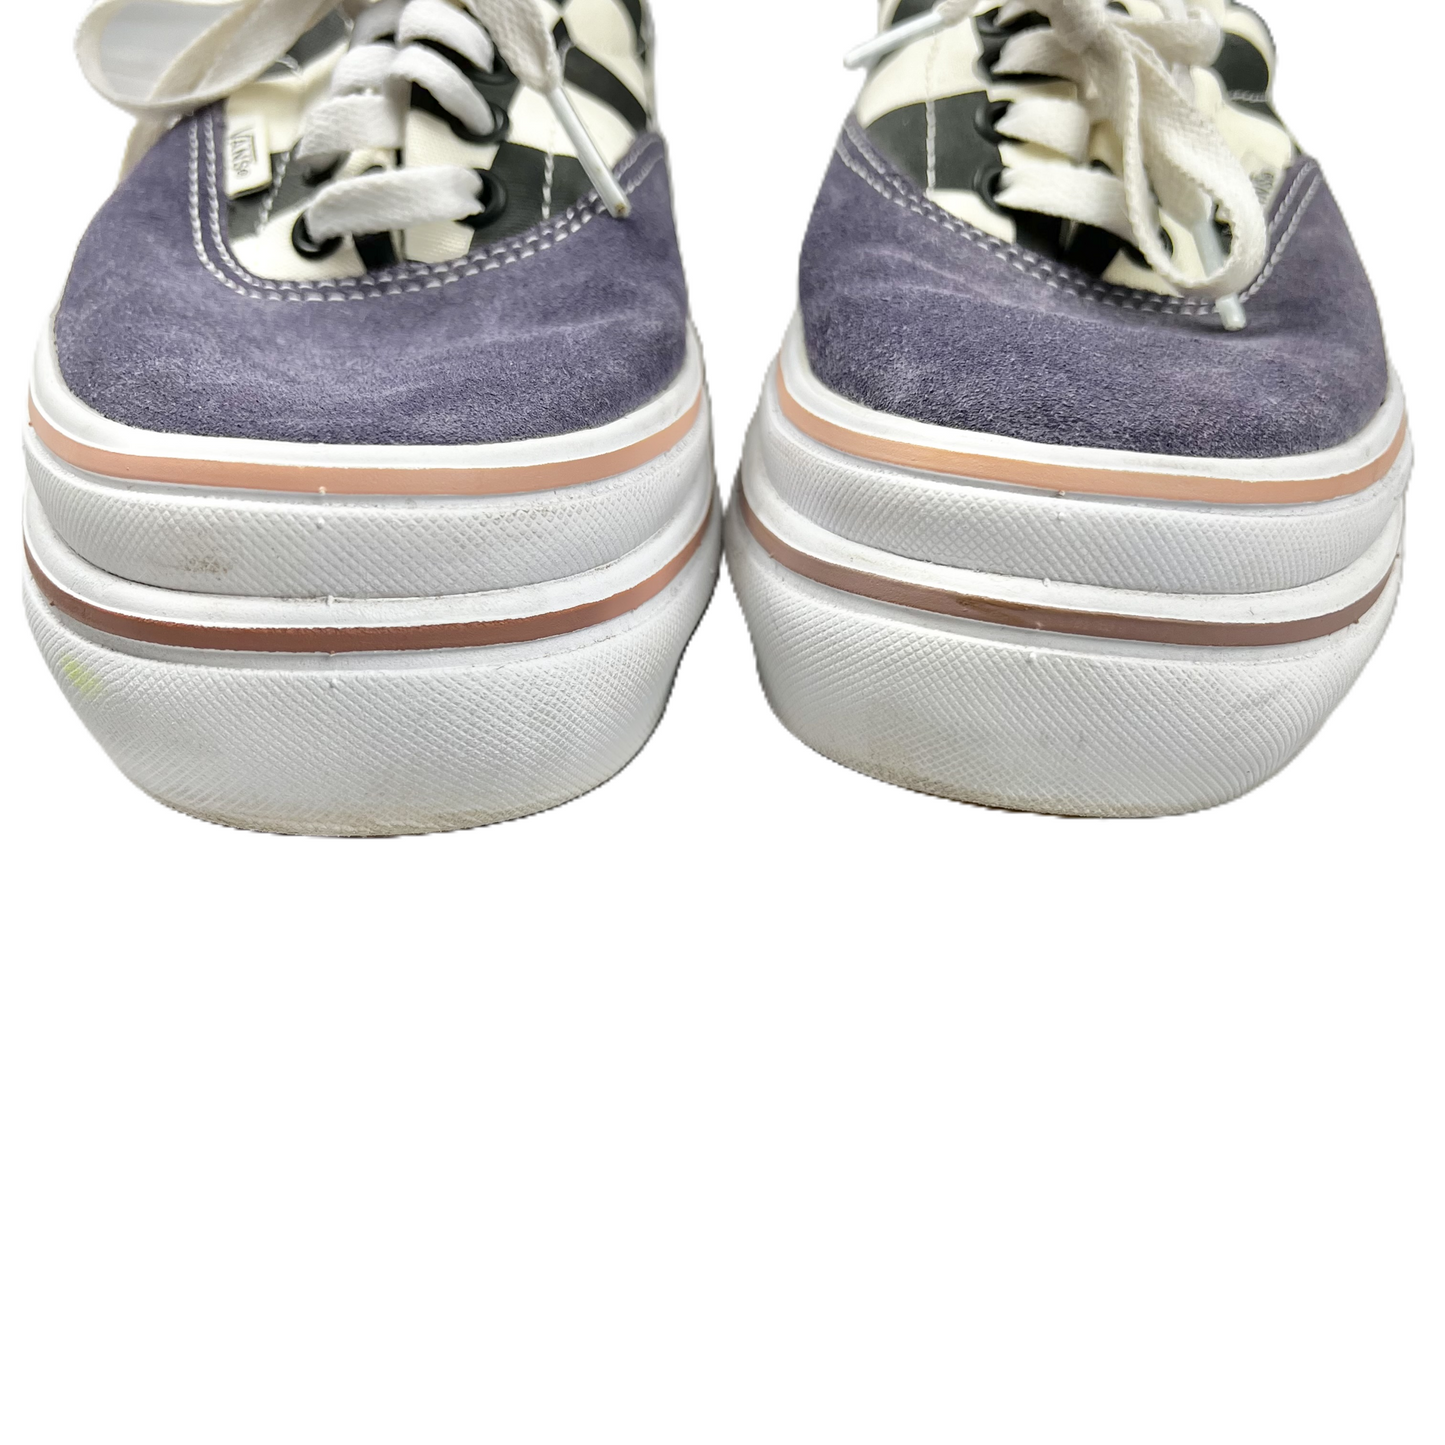 Cream & Purple Shoes Sneakers Platform By Vans, Size: 8